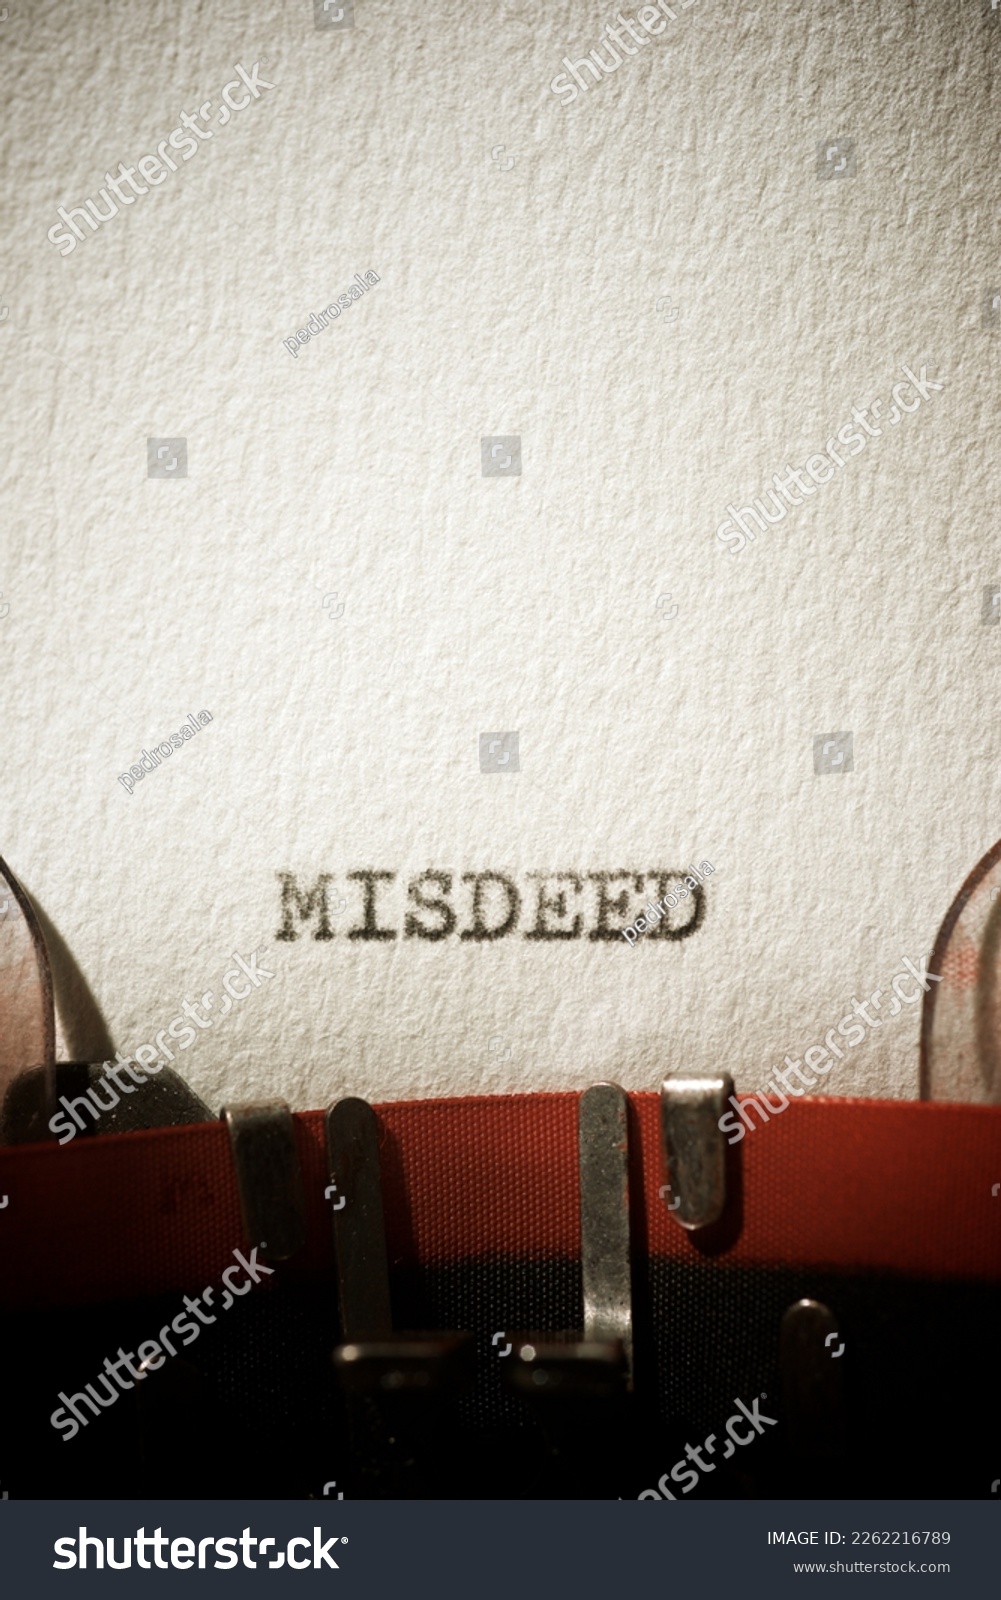 Misdeed word written with a typewriter. #2262216789